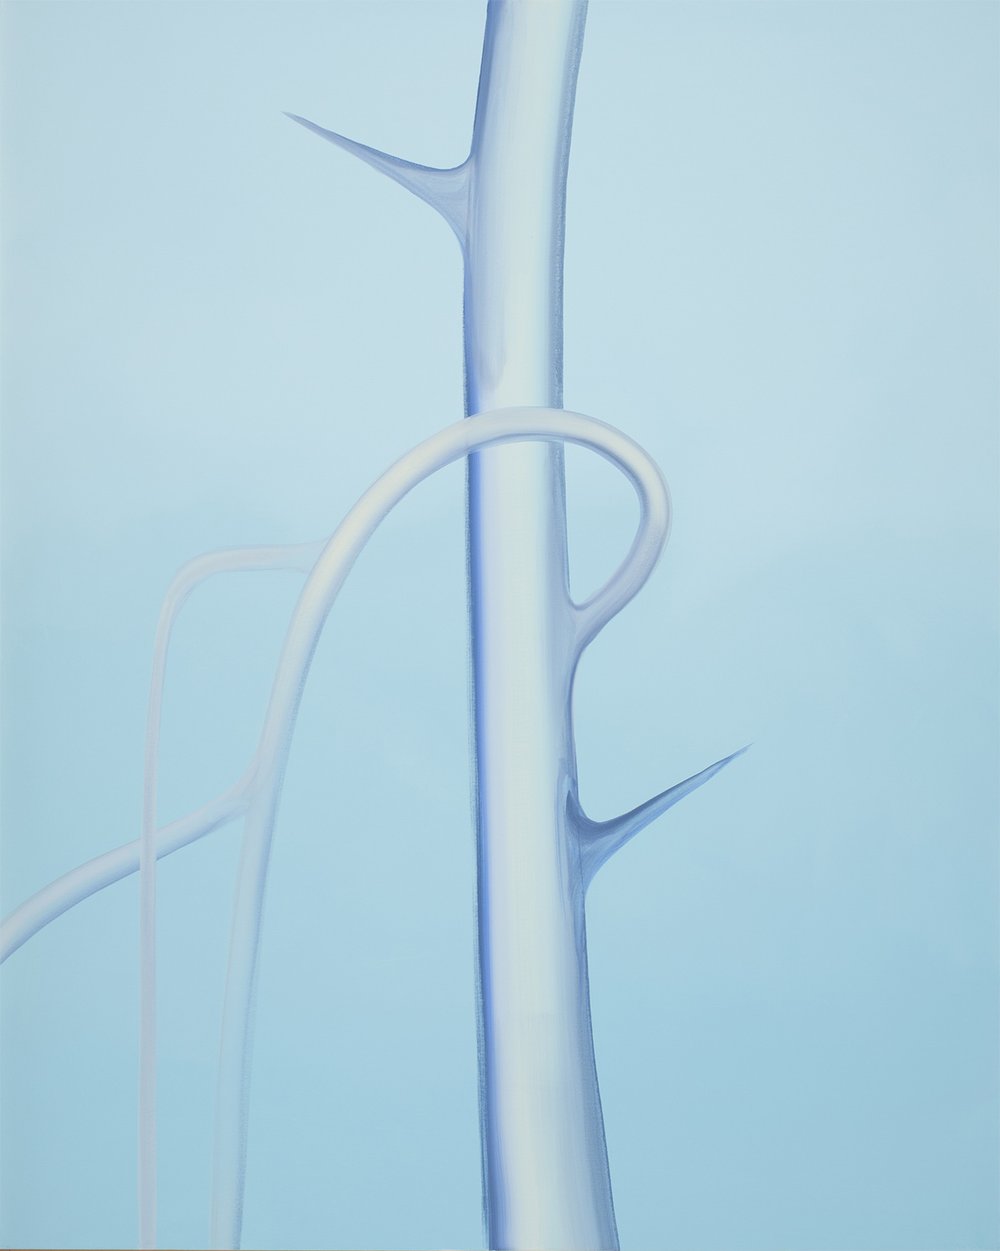   Wanda Koop,   Ghost Tree Thorn - Blue , 2021  Acrylique sur toile / Acrylic on canvas, 60 x 48 in. 